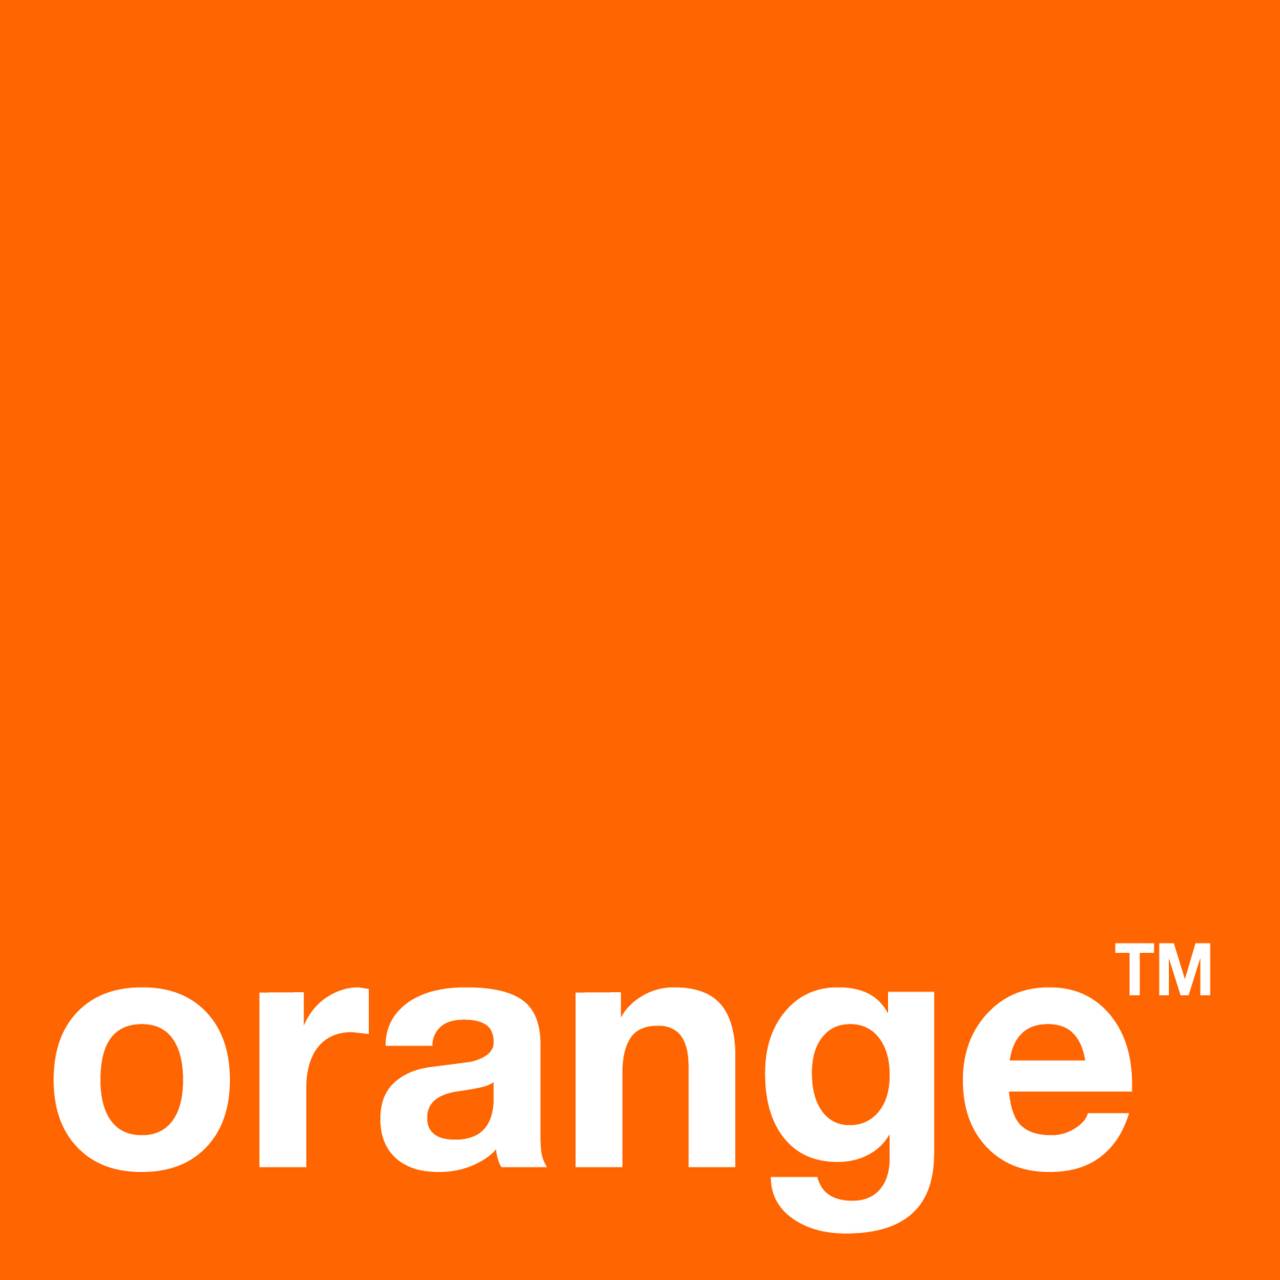 Telecom Giant Orange Using eZ Publish as Their Platform for Online Digital Experience